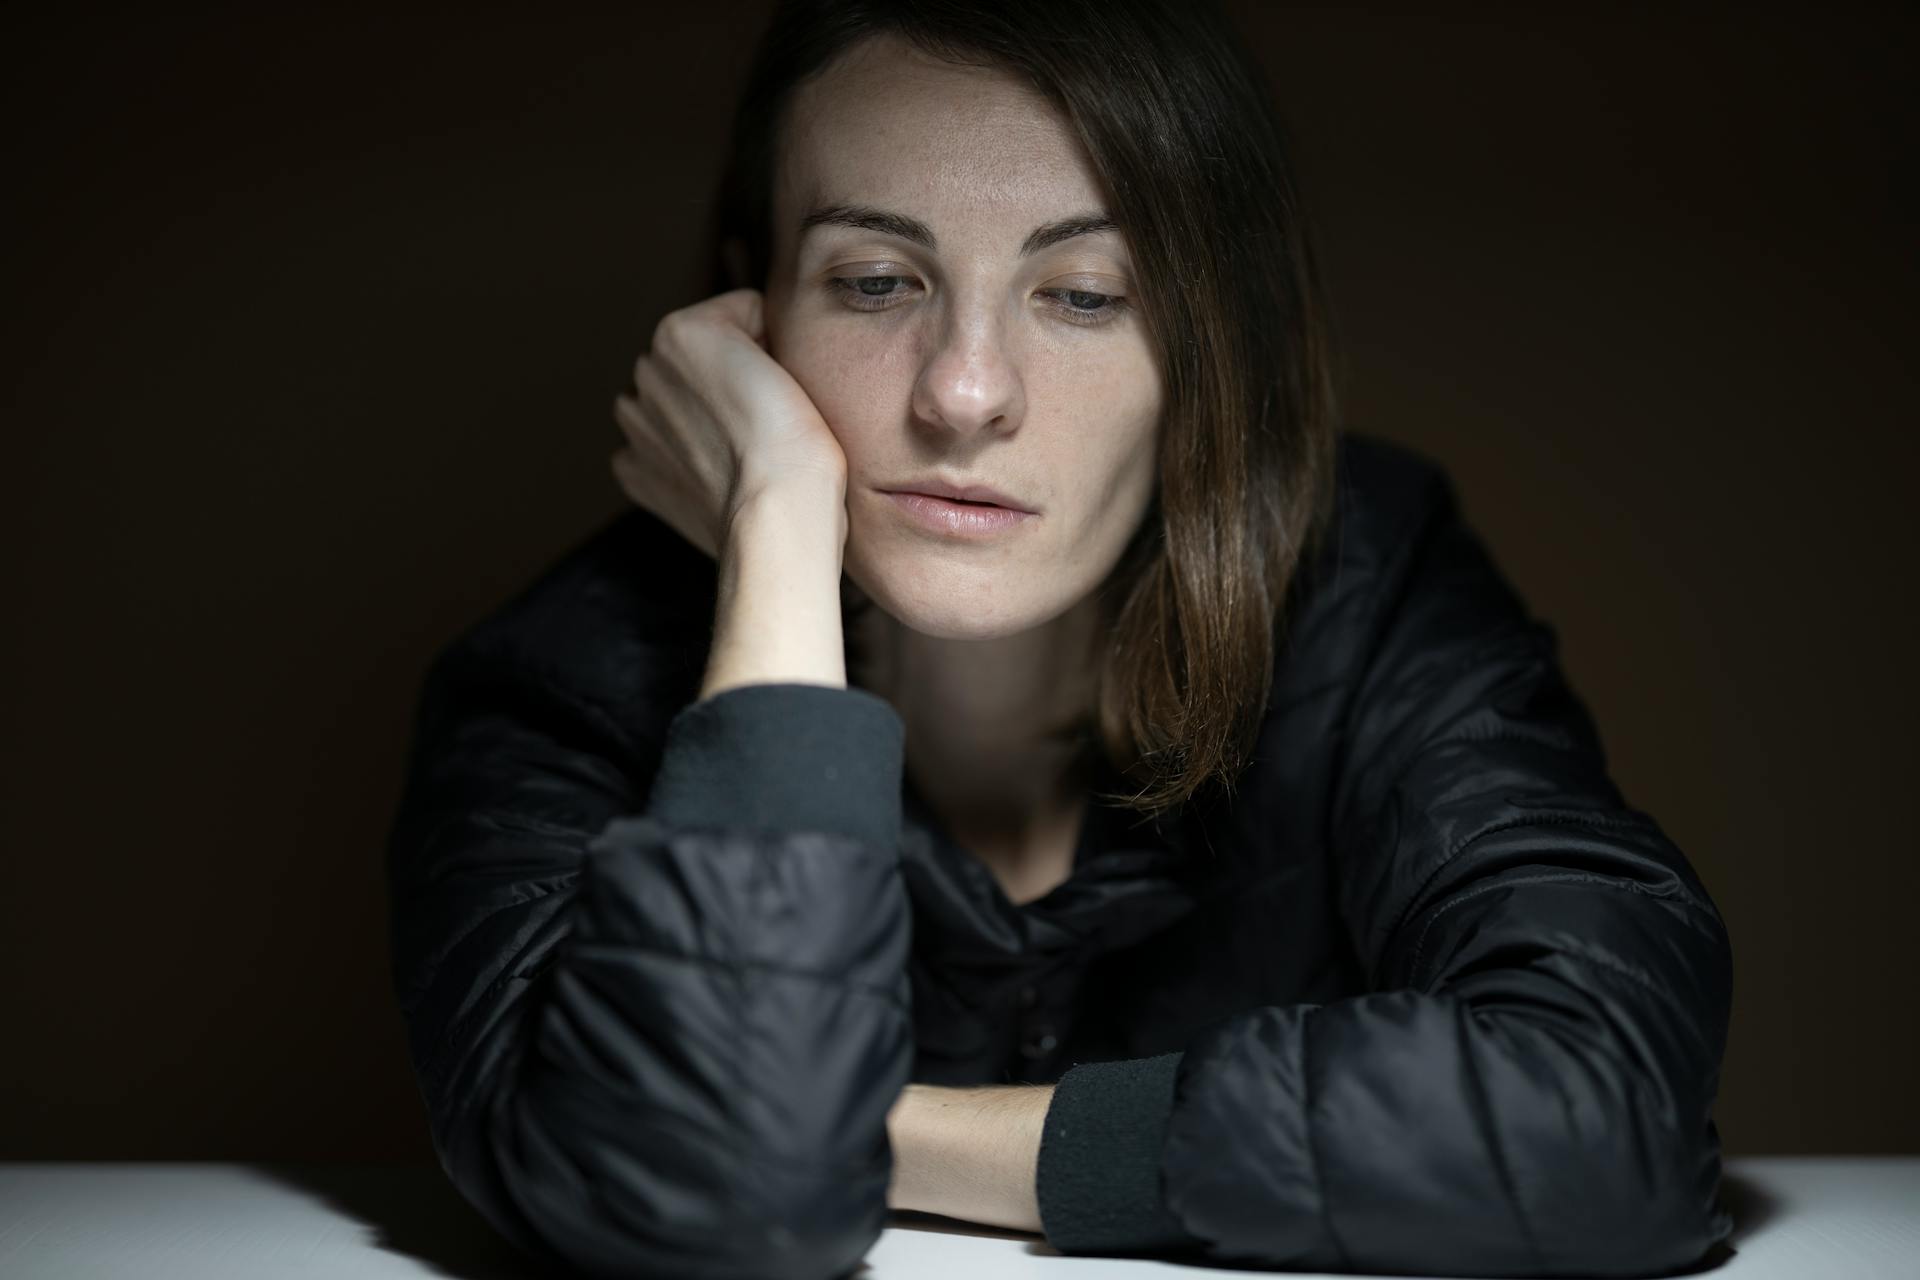 A depressed woman | Source: Pexels